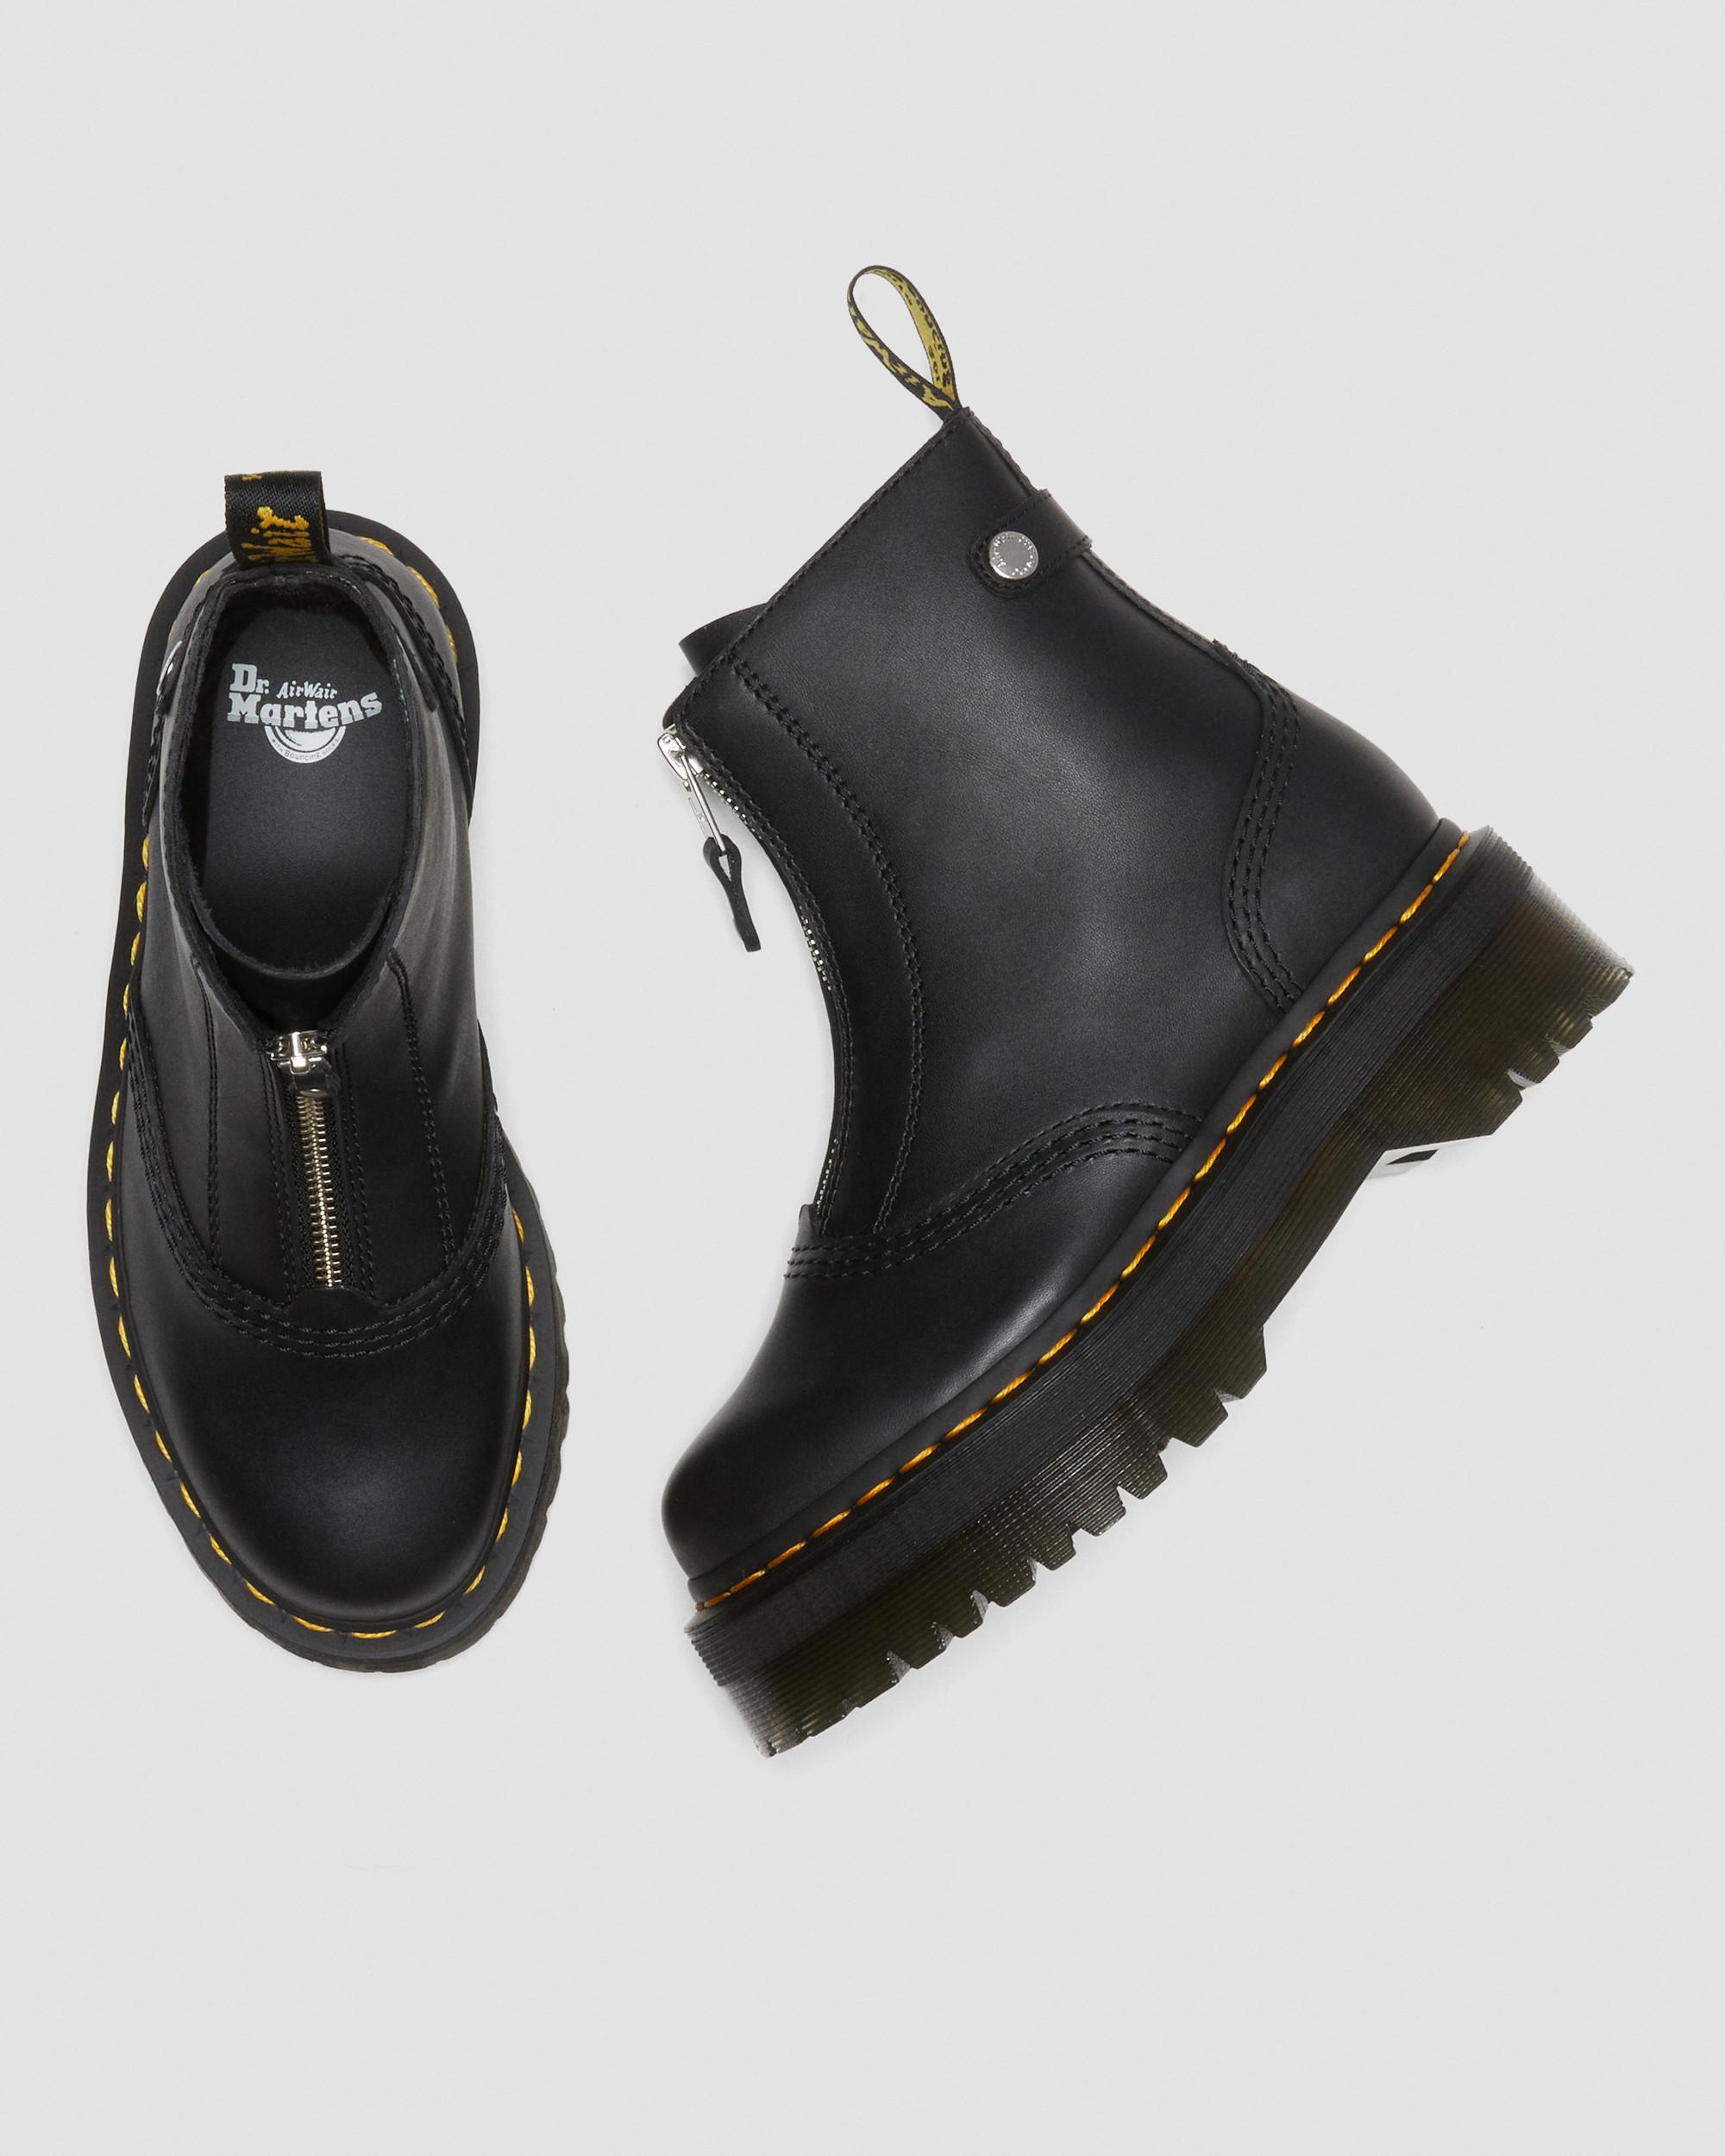 Dr. Martens Women's Jetta Sendal Leather Boot Fashion